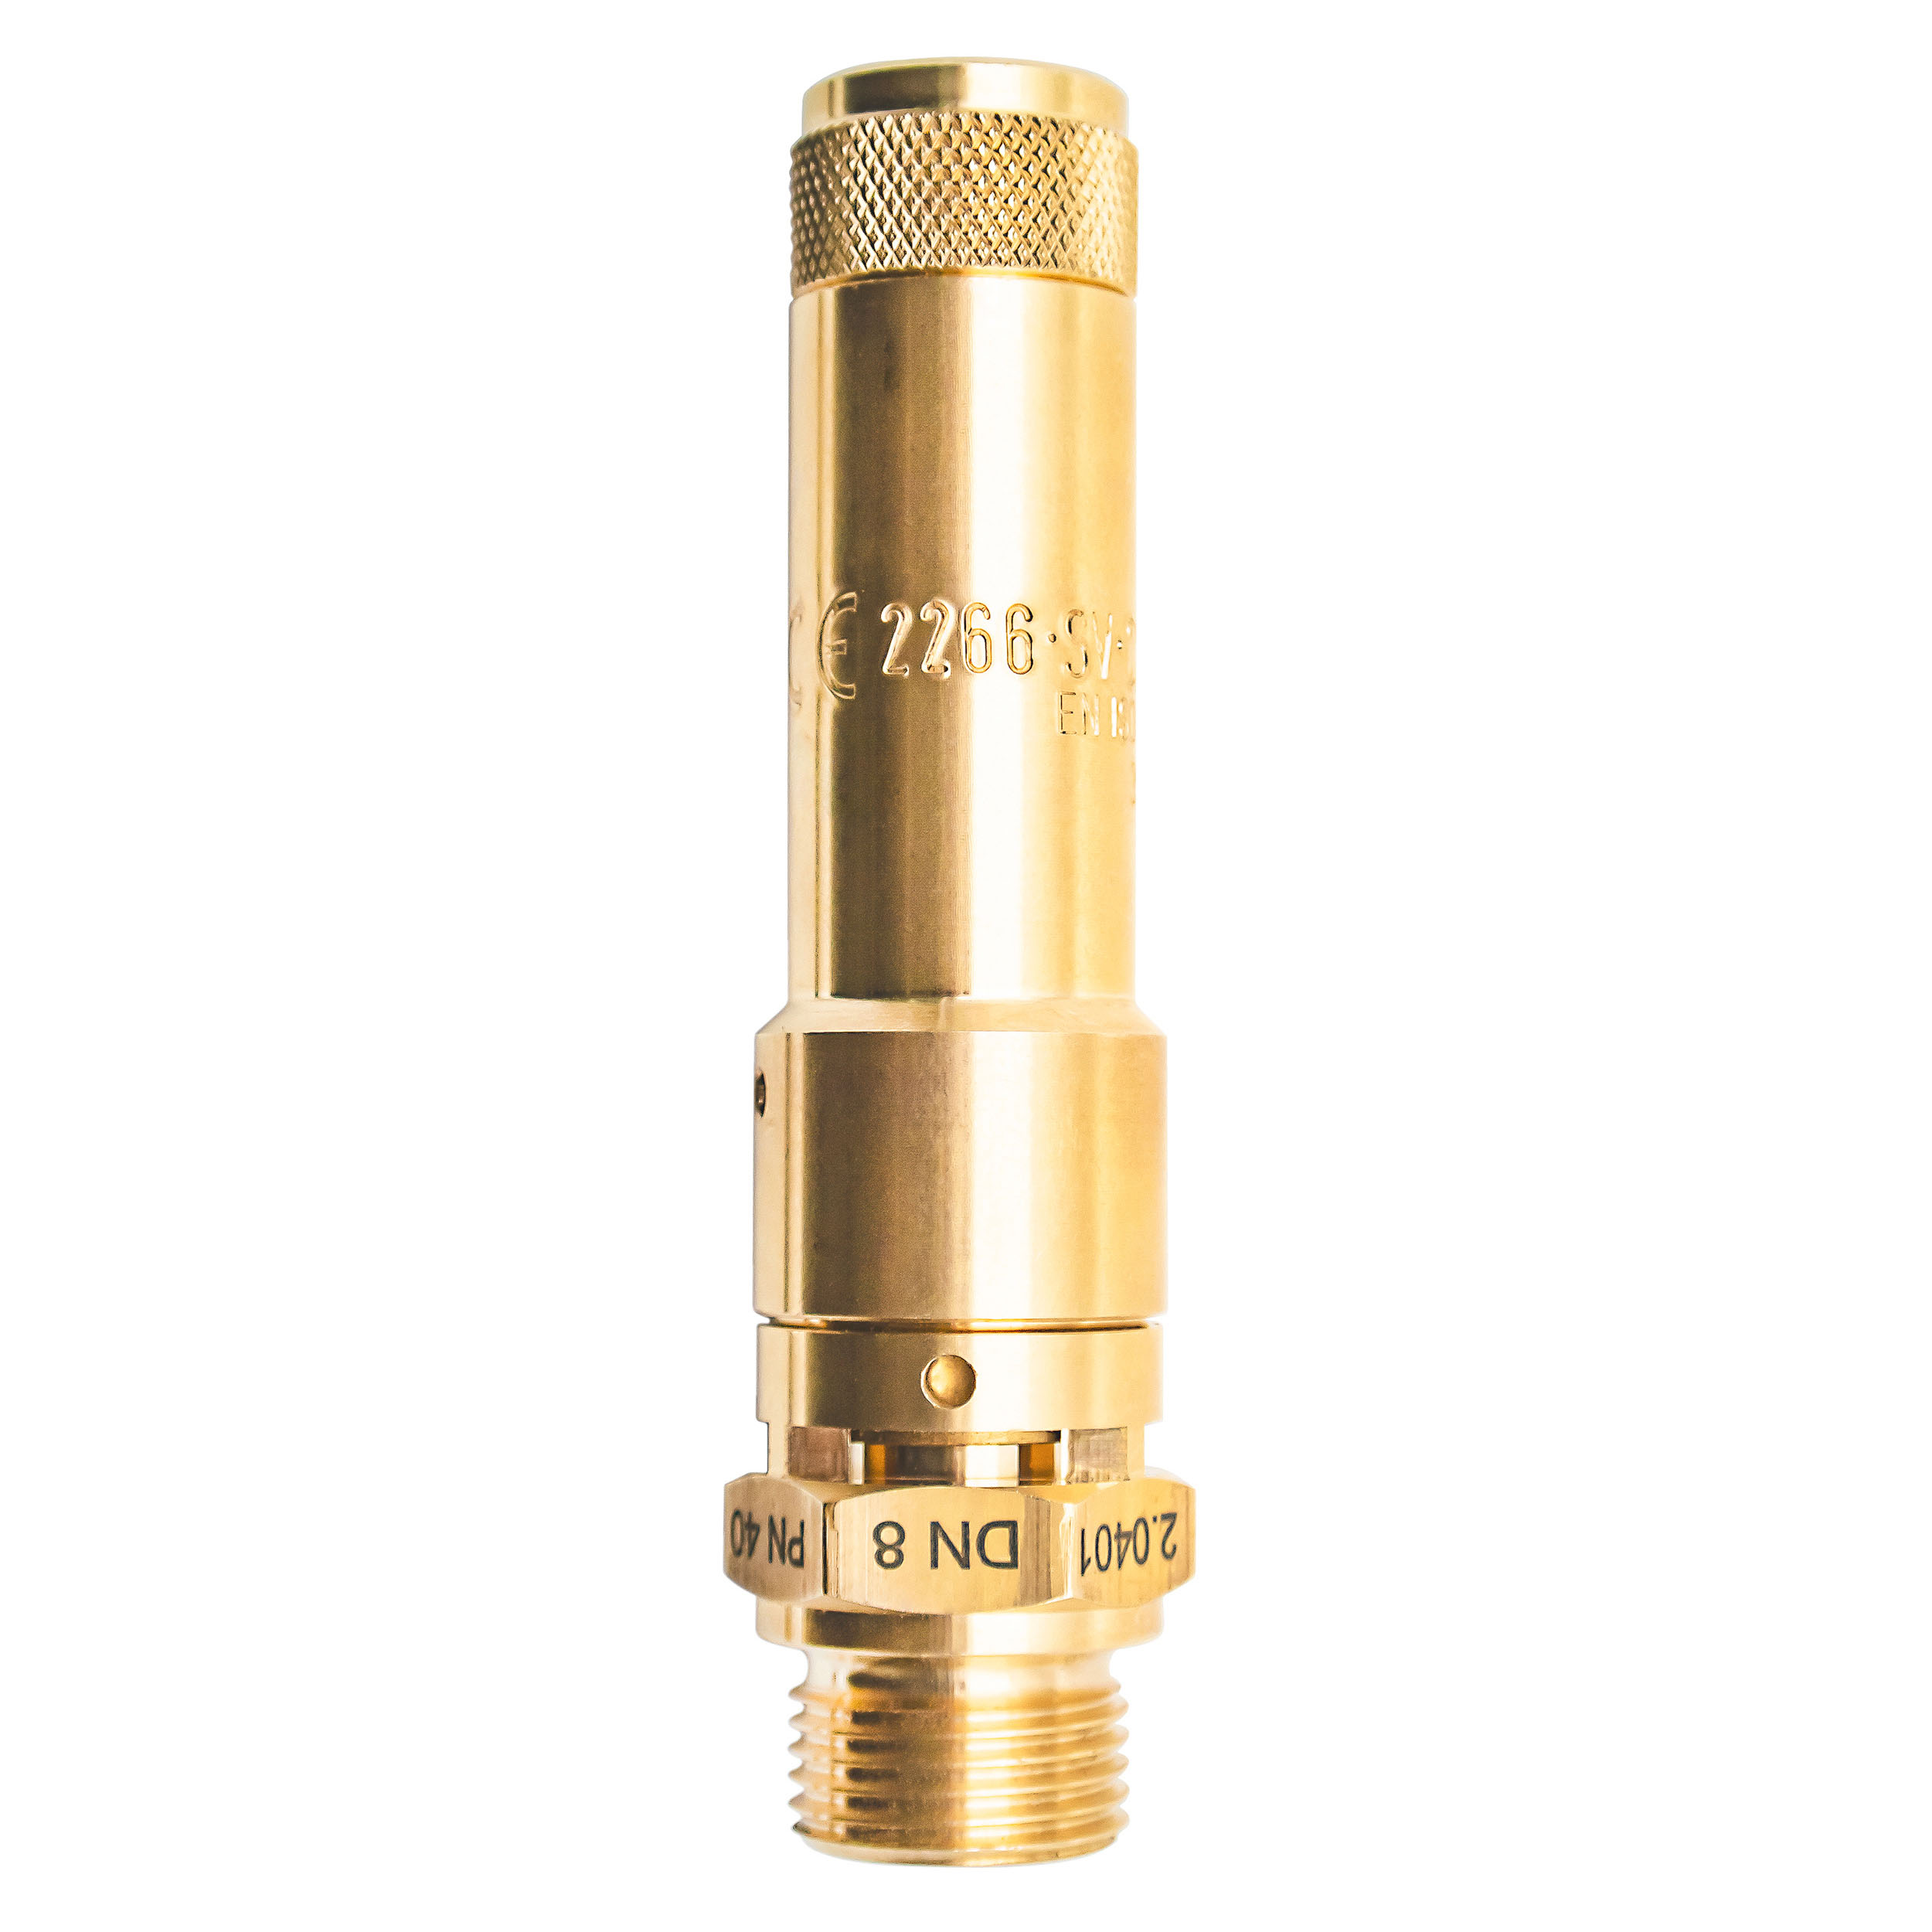 Savety valve component tested DN 8, G¼, set pressure: 8.9 bar (129,05 psi)